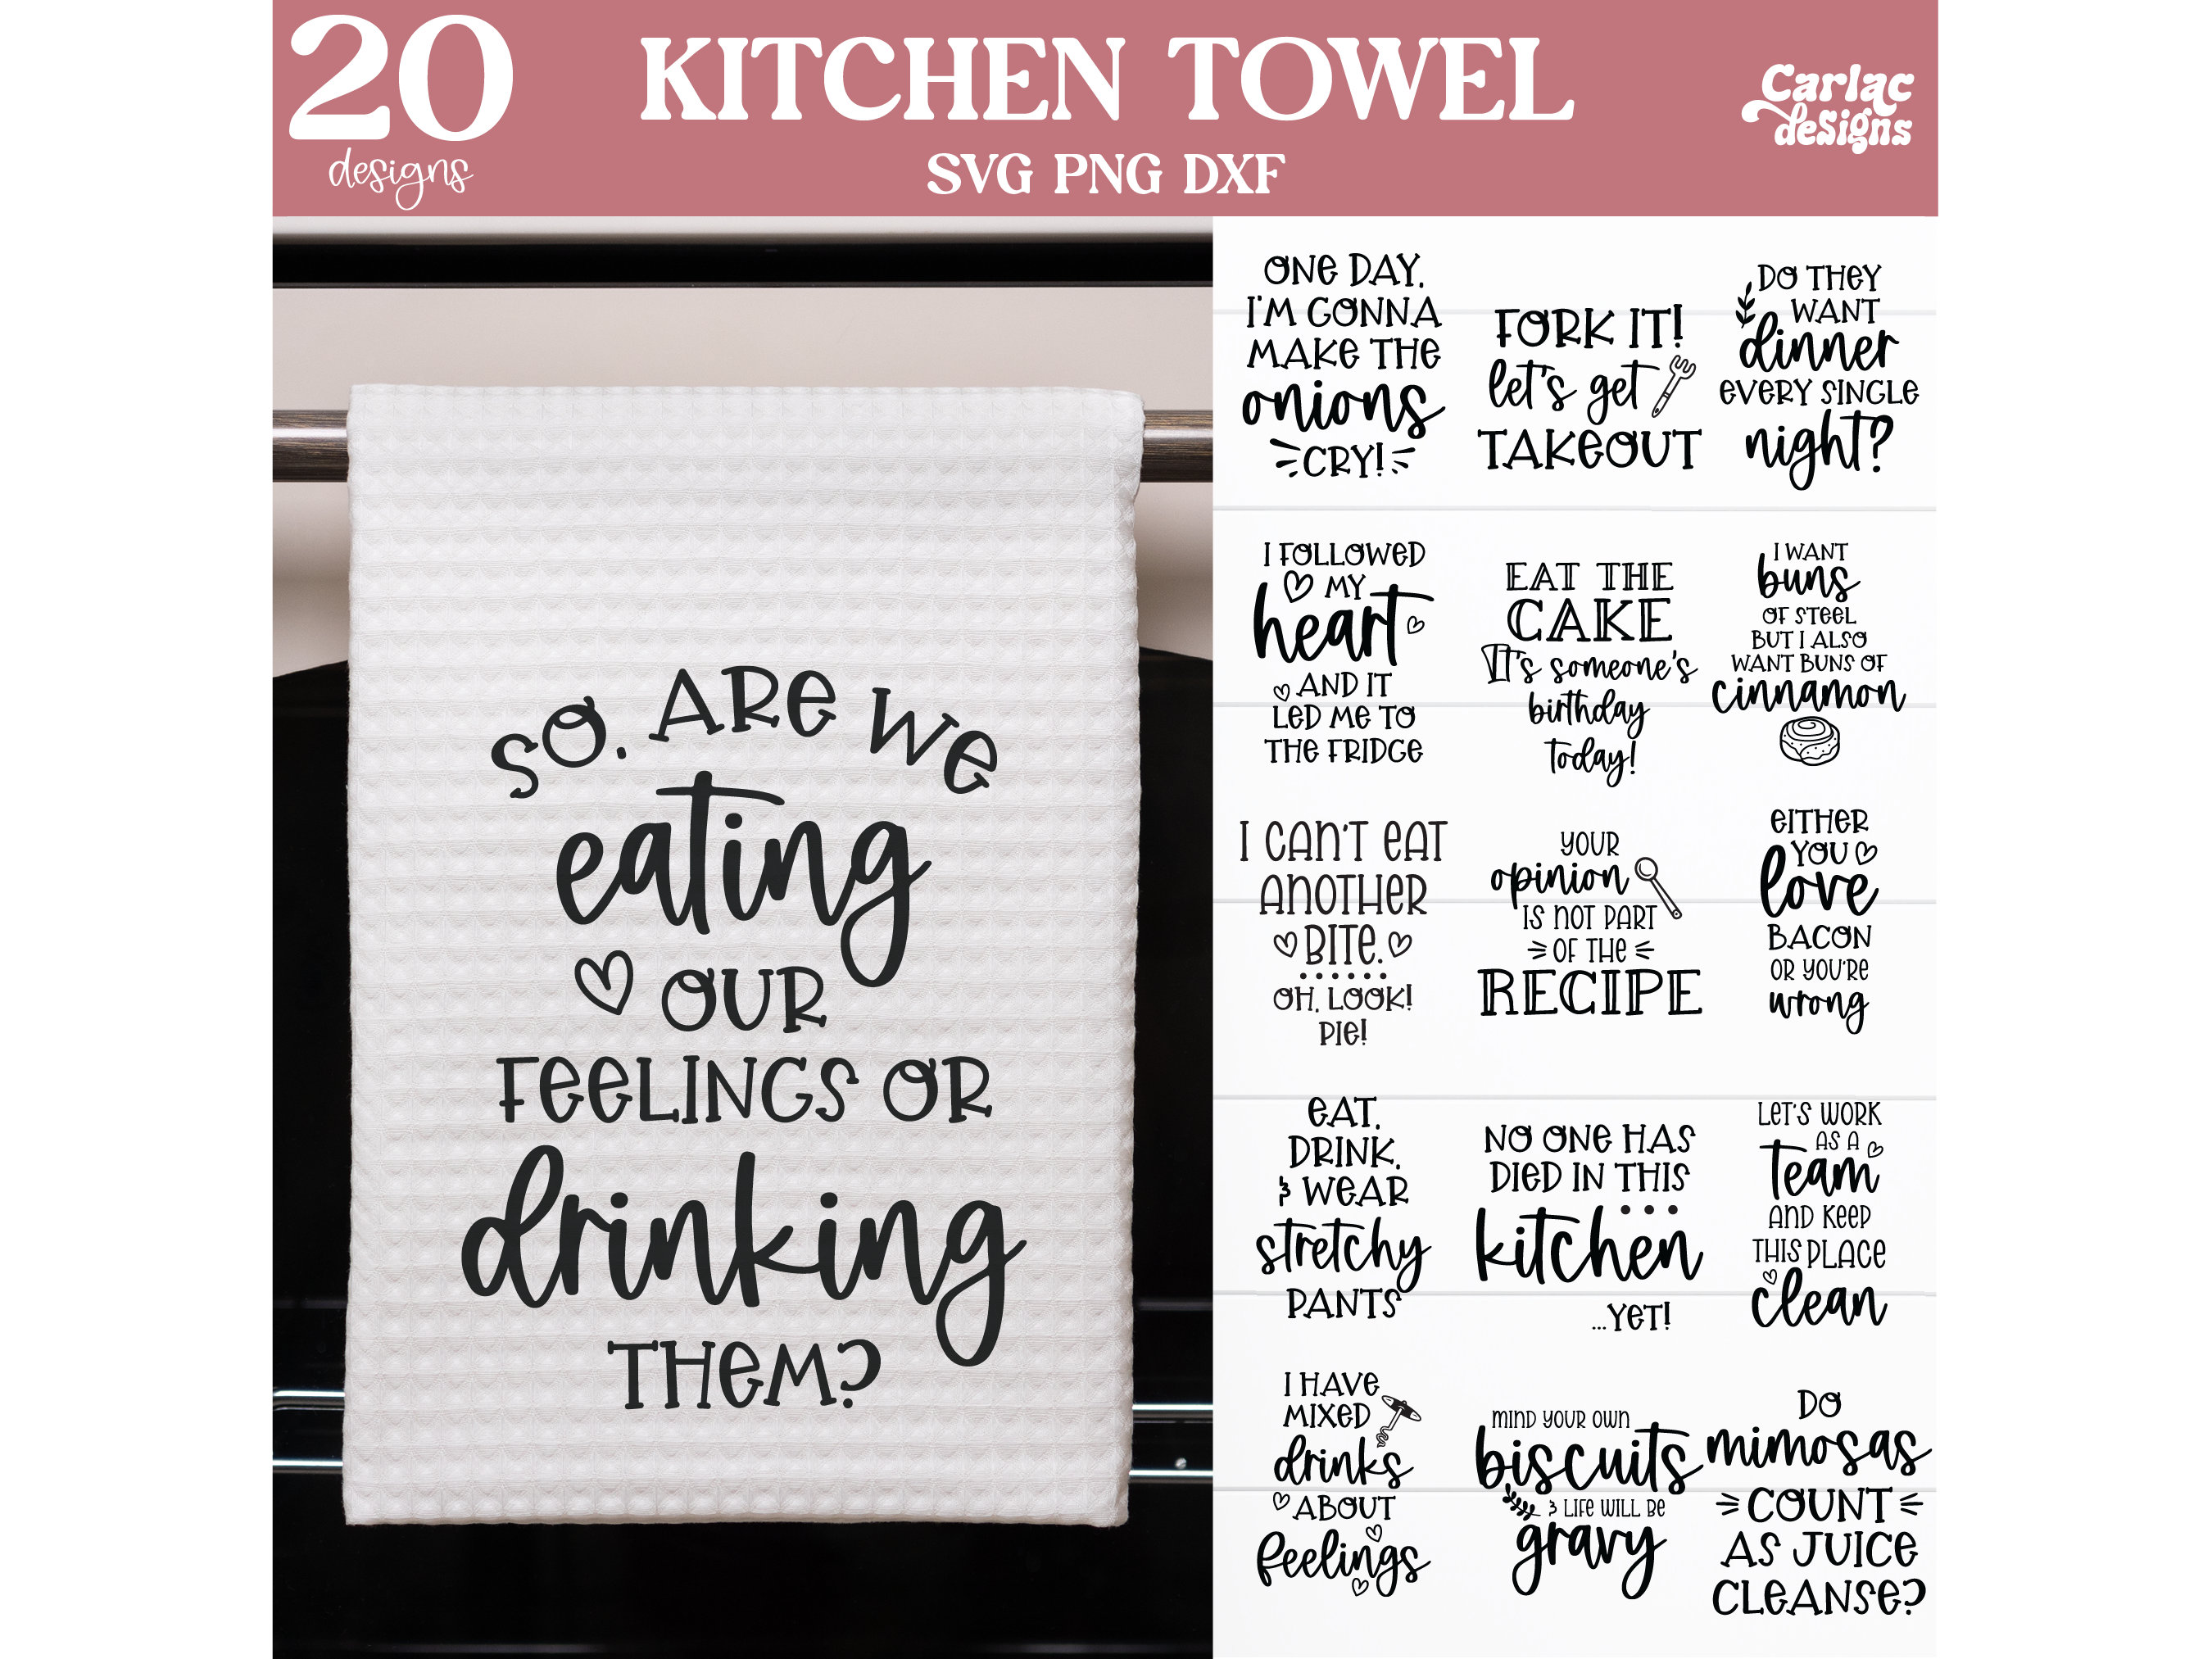 Funny Alcohol Dish Towel Sayings PNG, Dish Towel Sublimation Bundle, Funny  Tea Towel Png, Kitchen Towel Pngs, Flour Sack Towel Png